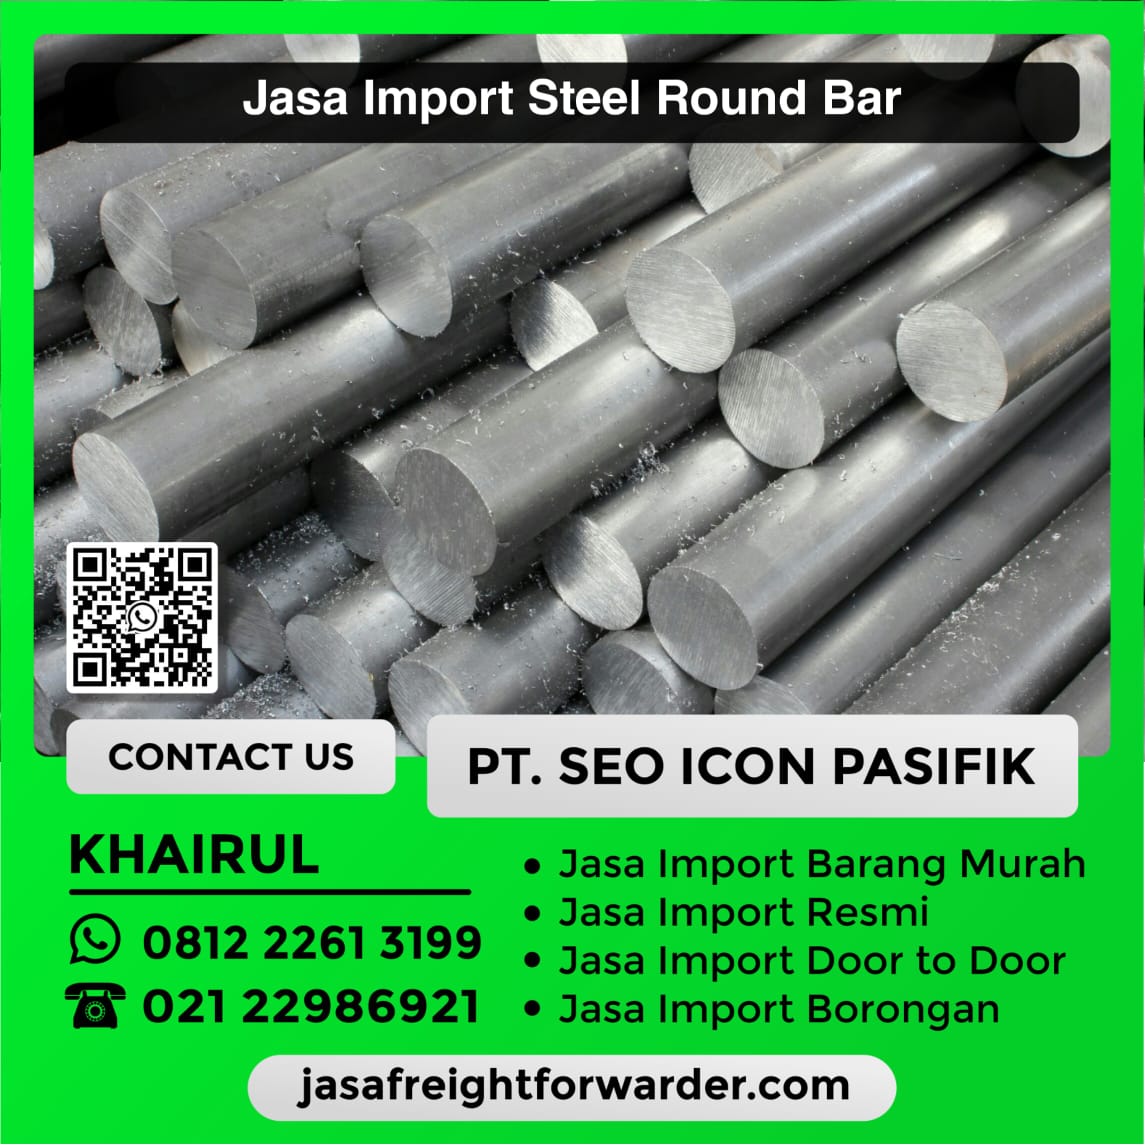 Jasa-Import-Steel-Round-Bar.jpeg